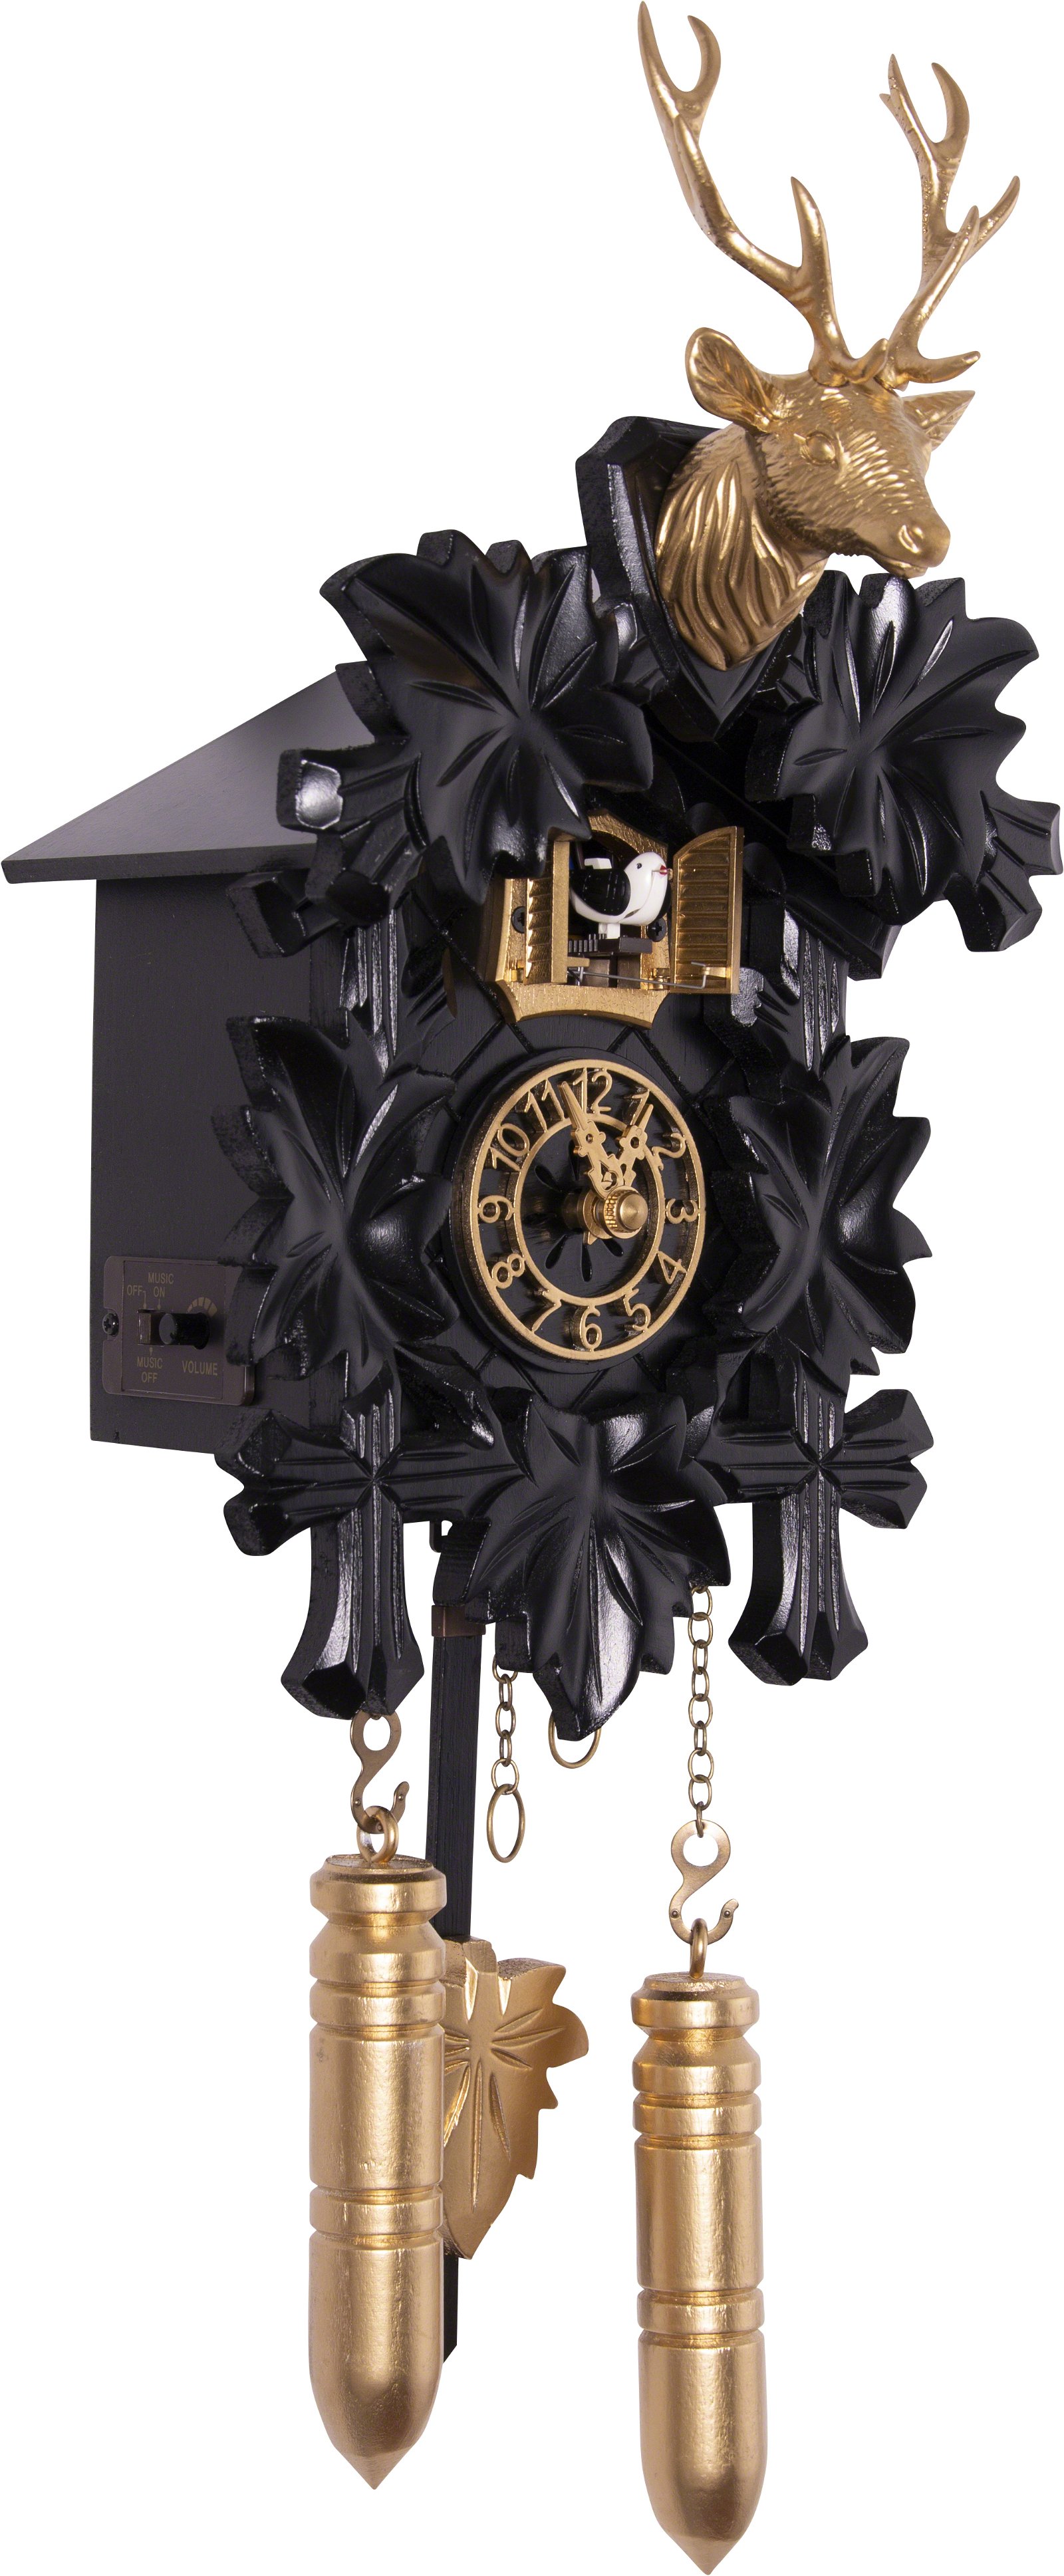 Reloj de cuco estilo moderno de cuarzo 22cm de Trenkle Uhren